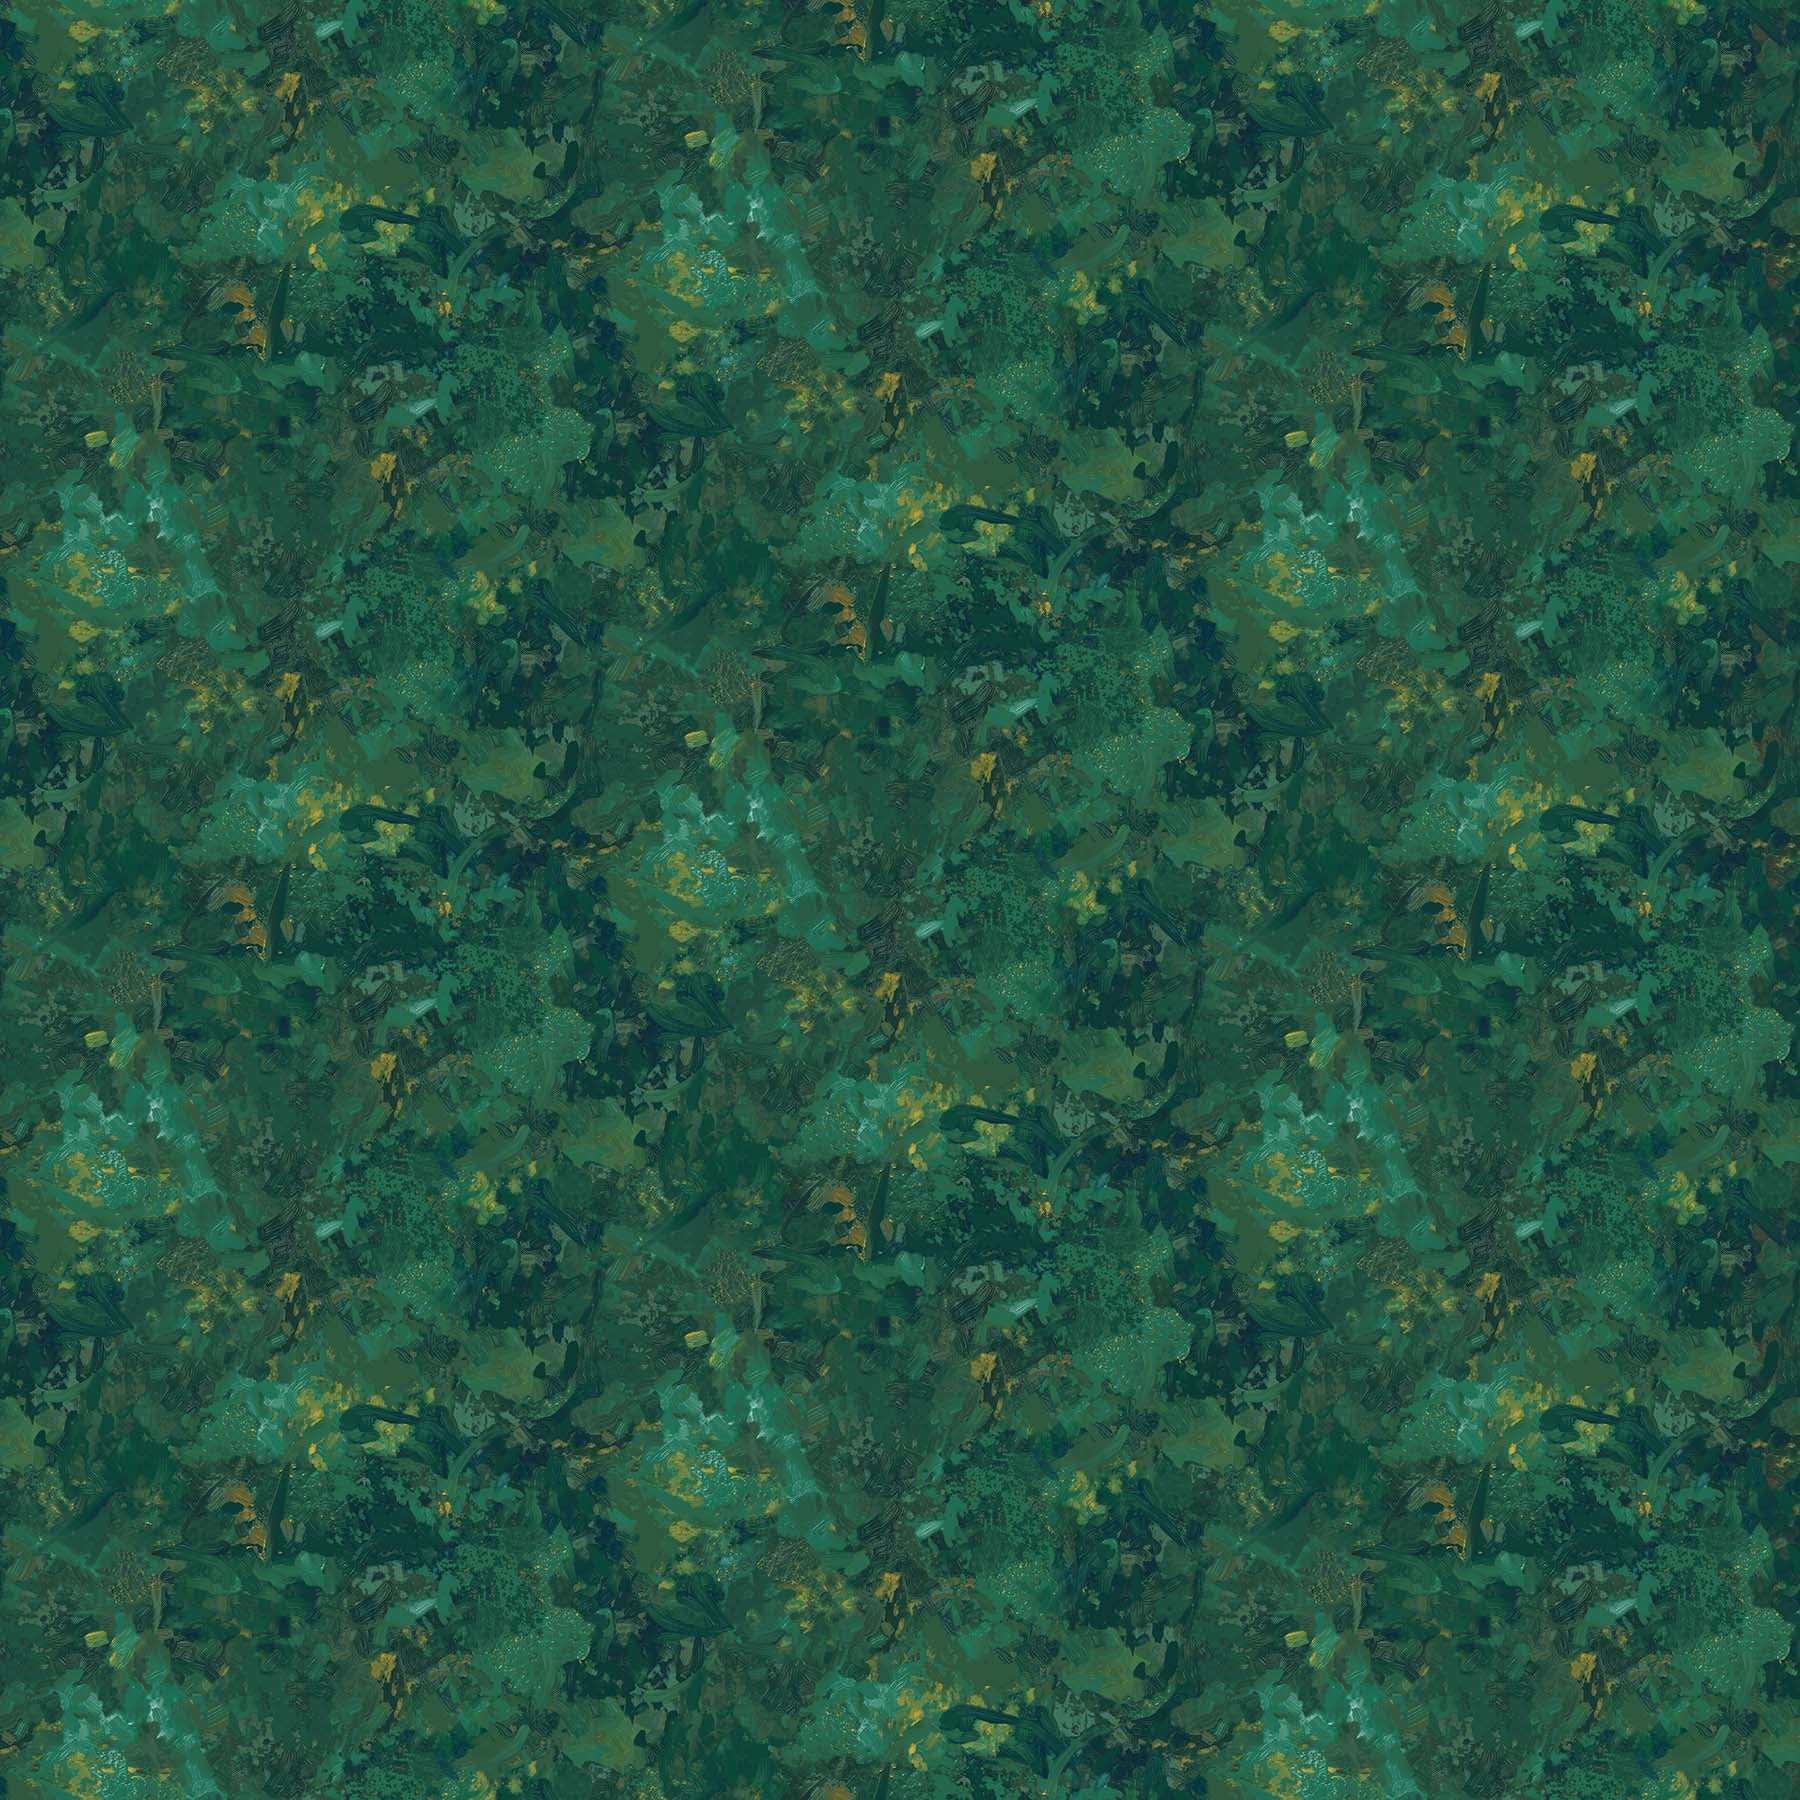 Fabric, Chroma, Spruce 9060-76